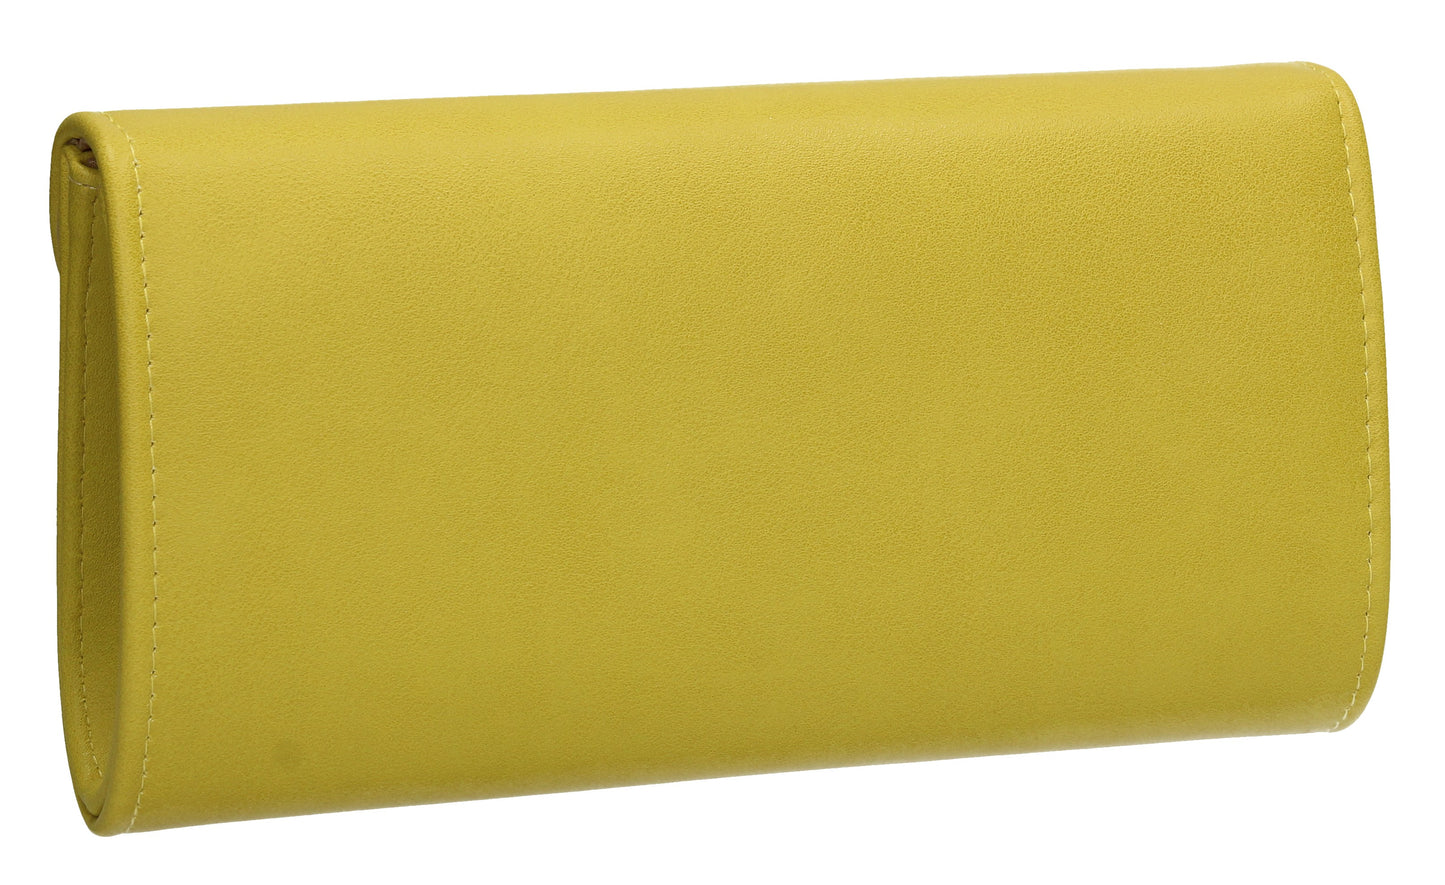 SWANKYSWANS Harley Clutch Bag Yellow Cute Cheap Clutch Bag For Weddings School and Work